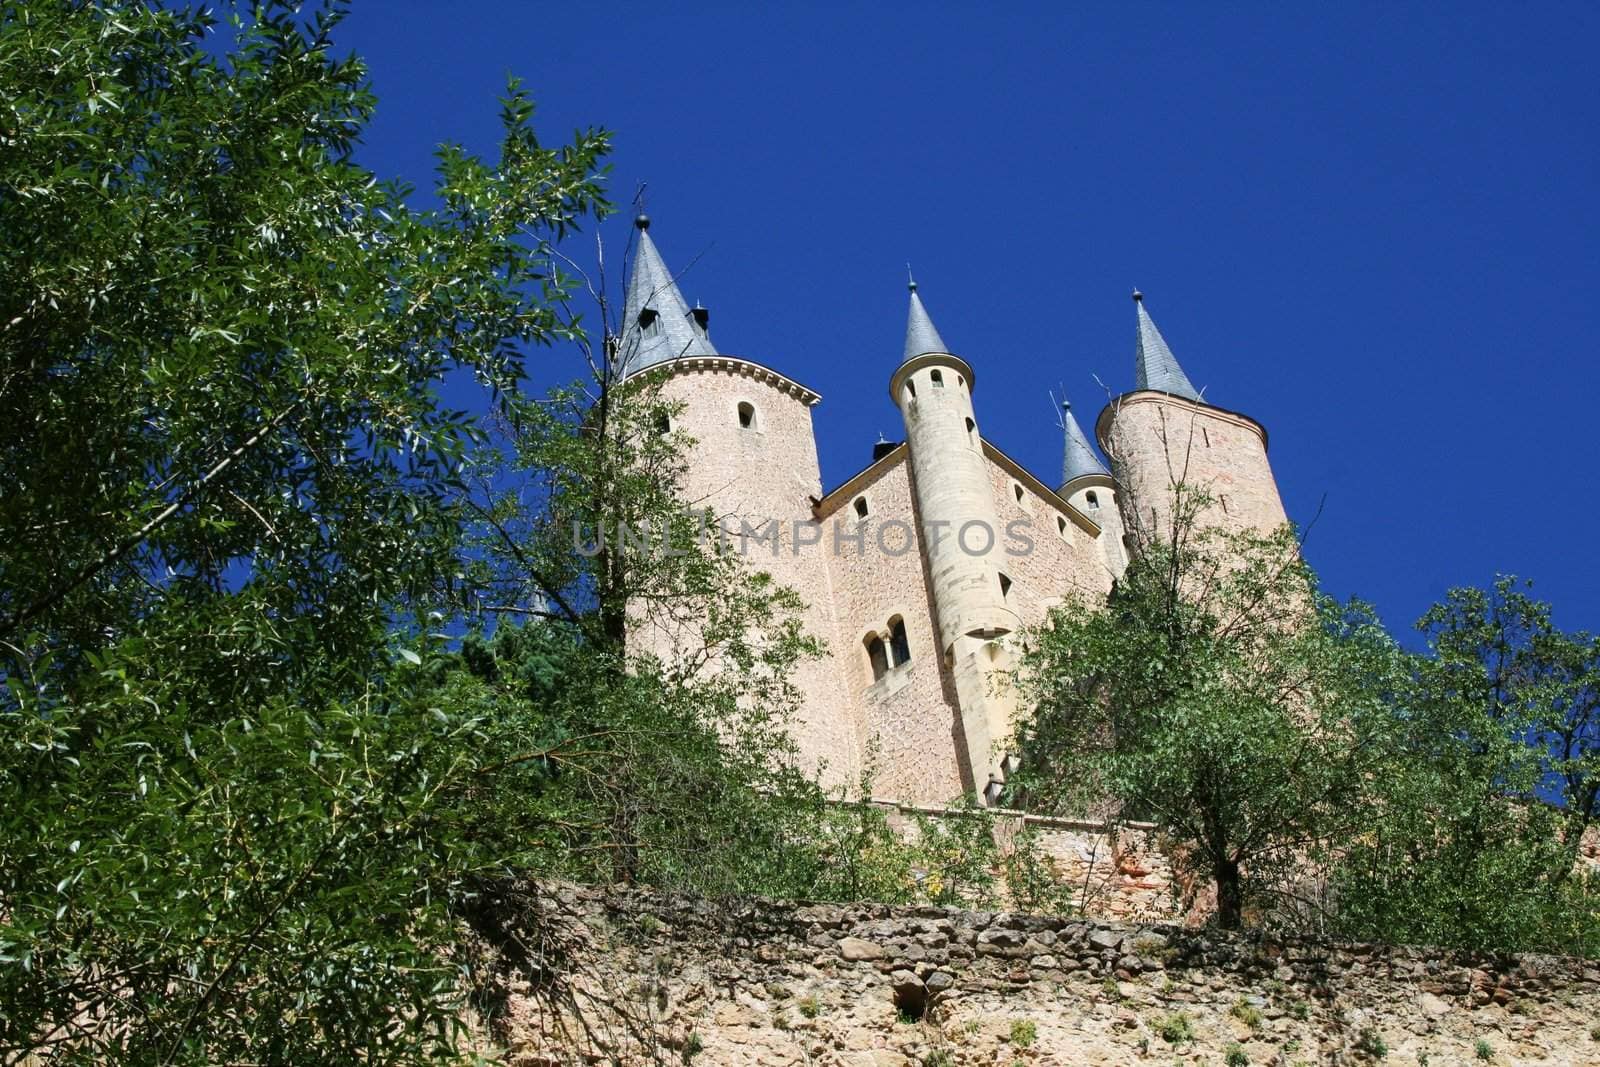 Castel Alcazar  Xi-XiX centuryes in Segovia /Spain/.